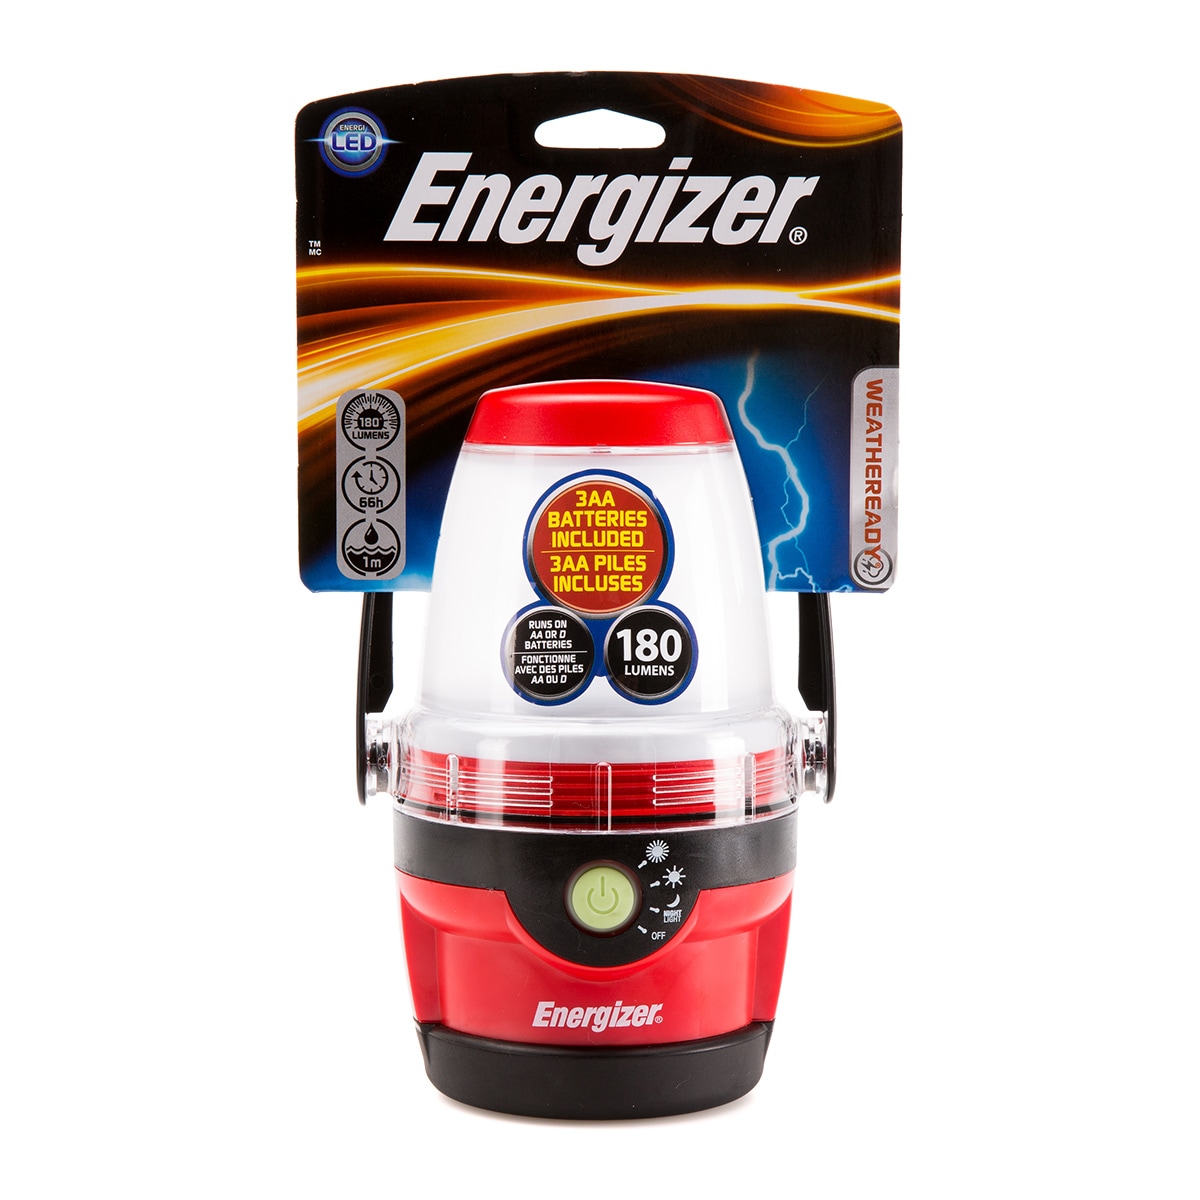 Energizer 360 Degree Area Led Portable Camp Lights : Target